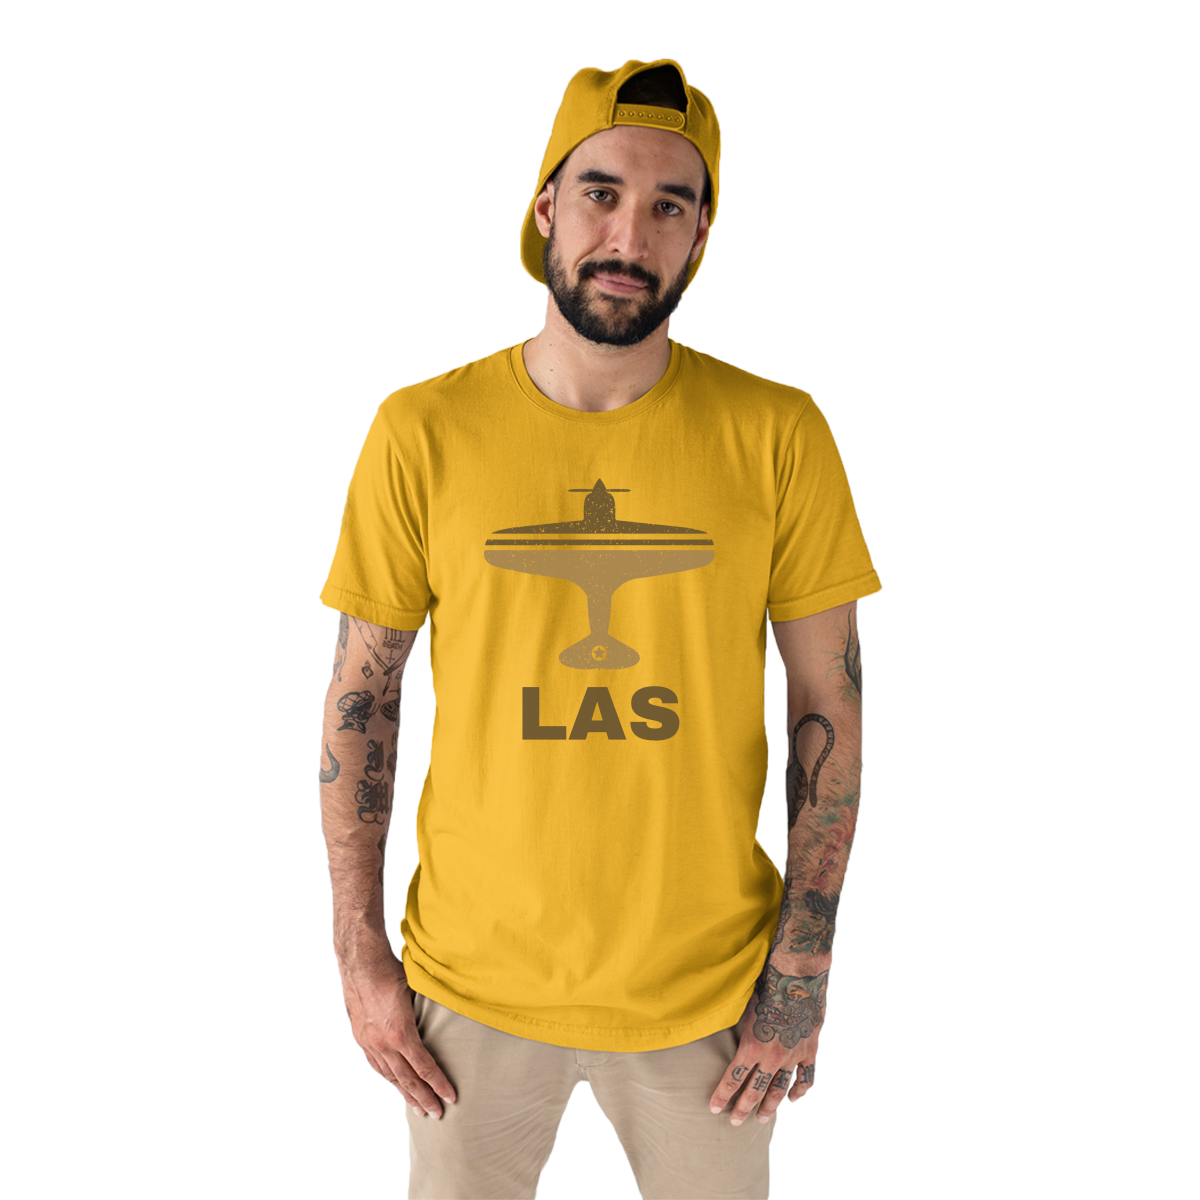 Fly Las Vegas LAS Airport Men's T-shirt | Yellow